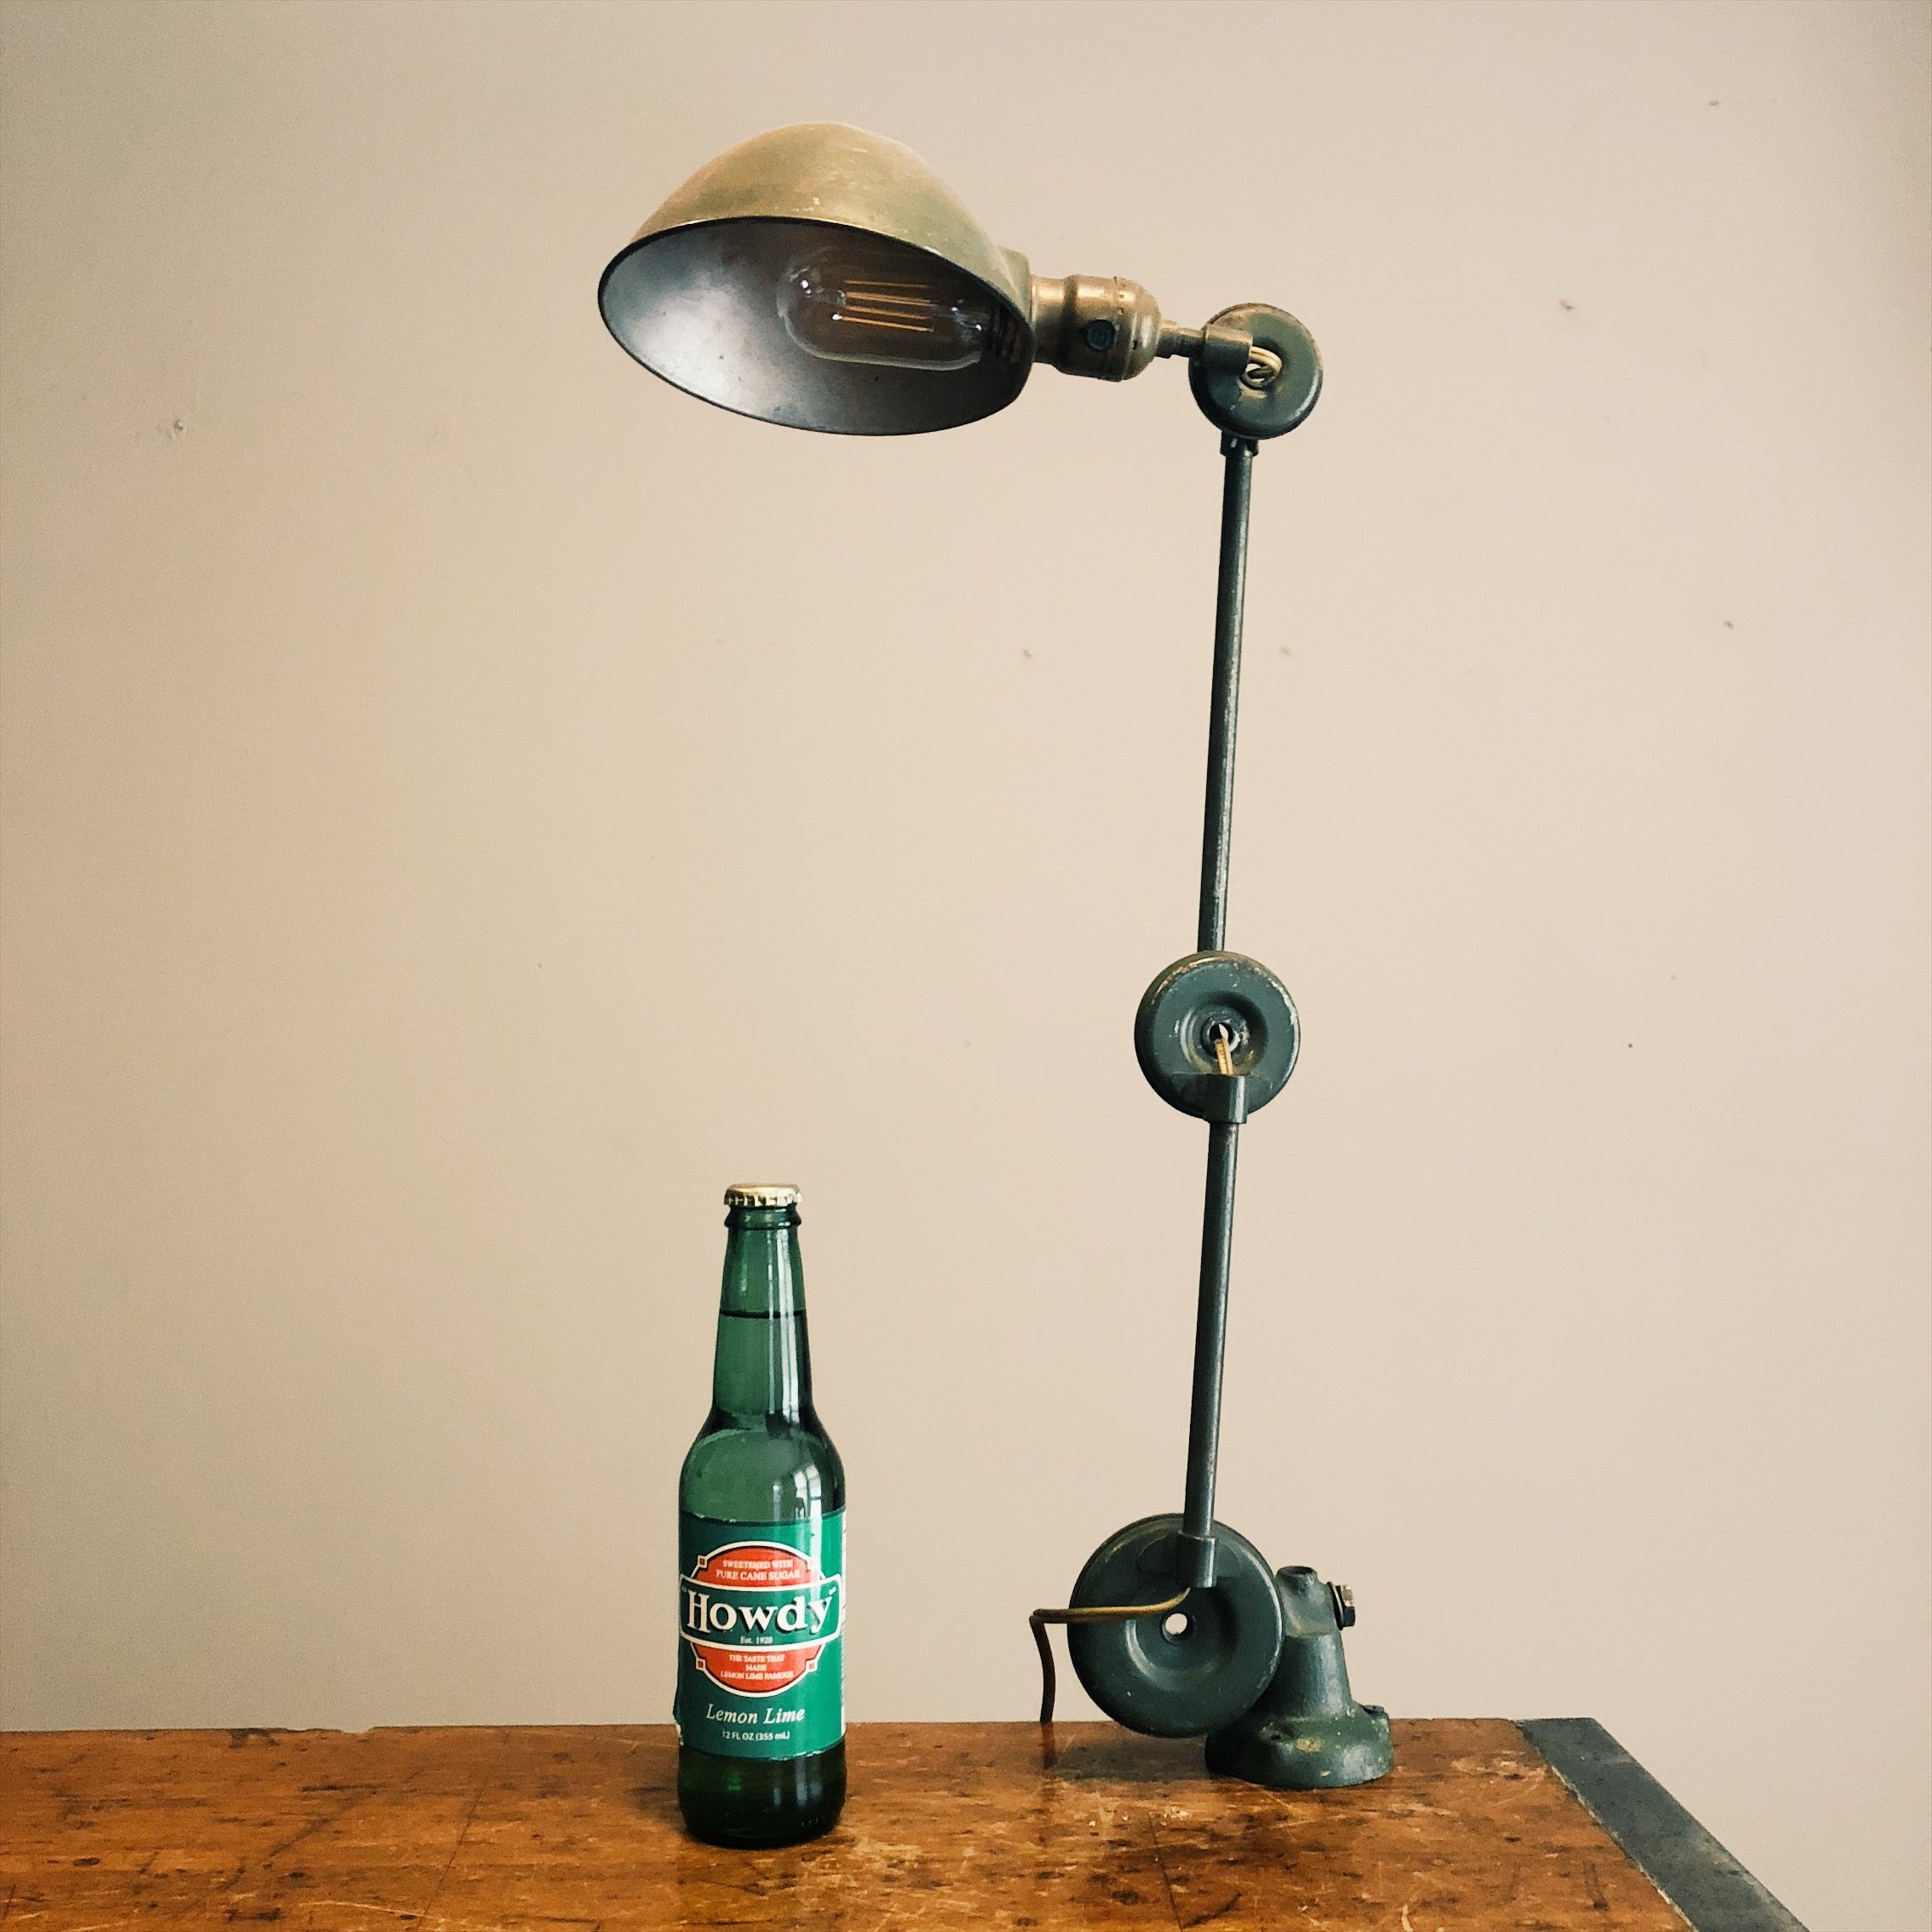 Rare Edon Esrobert Industrial Clamp Light from 1930s